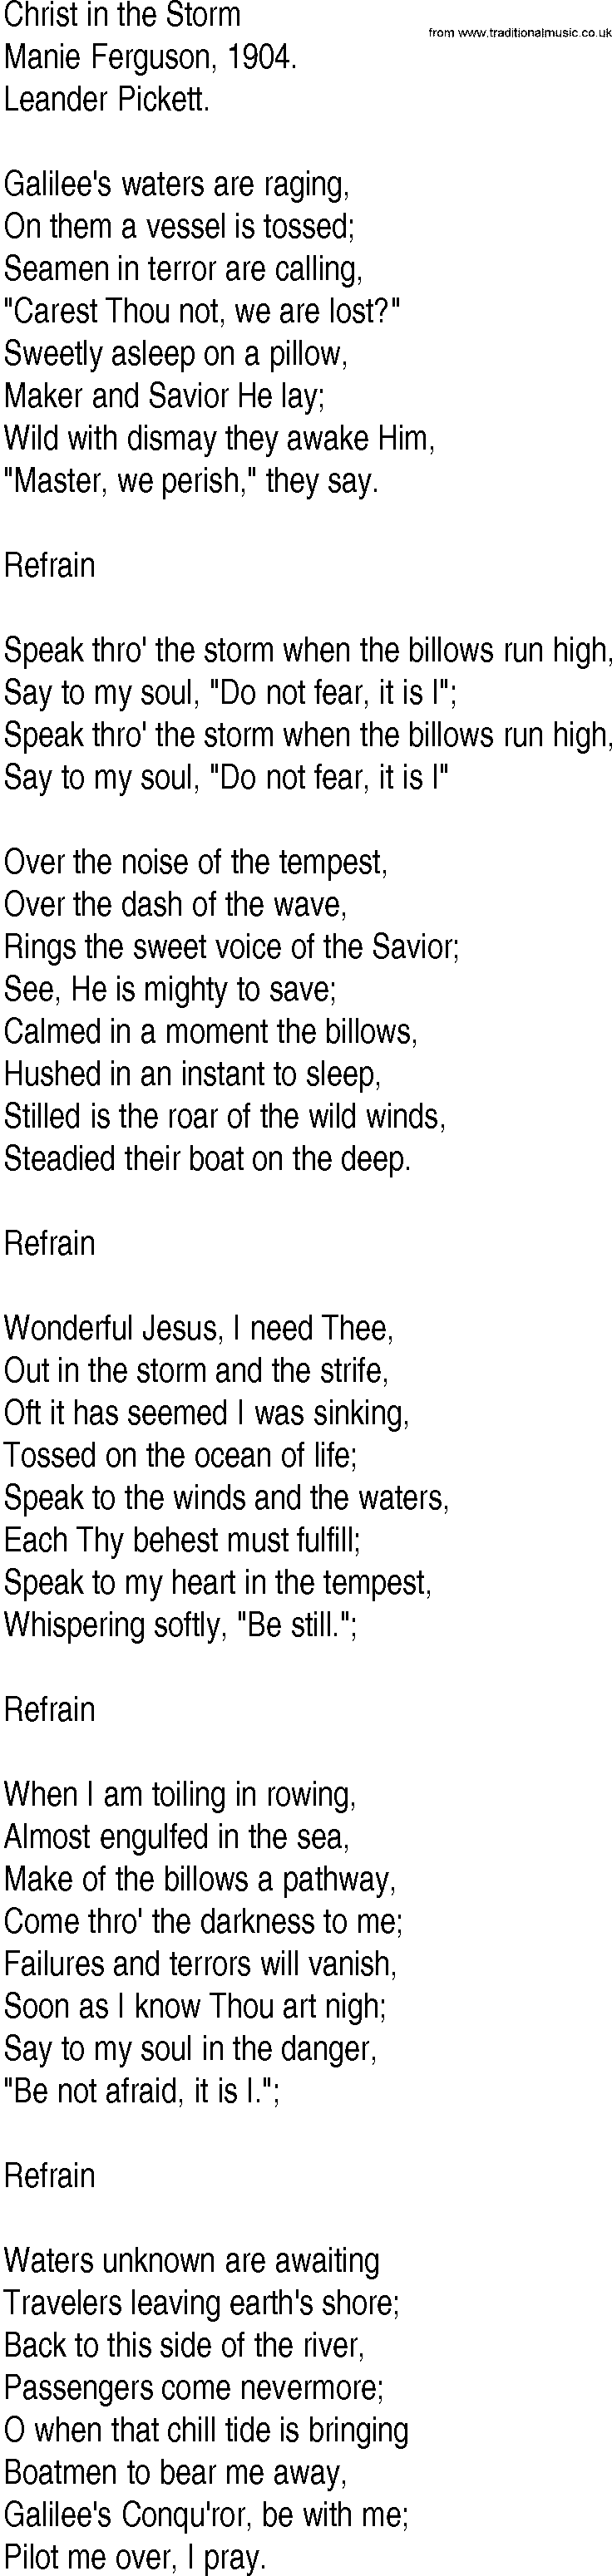 Hymn and Gospel Song: Christ in the Storm by Manie Ferguson lyrics